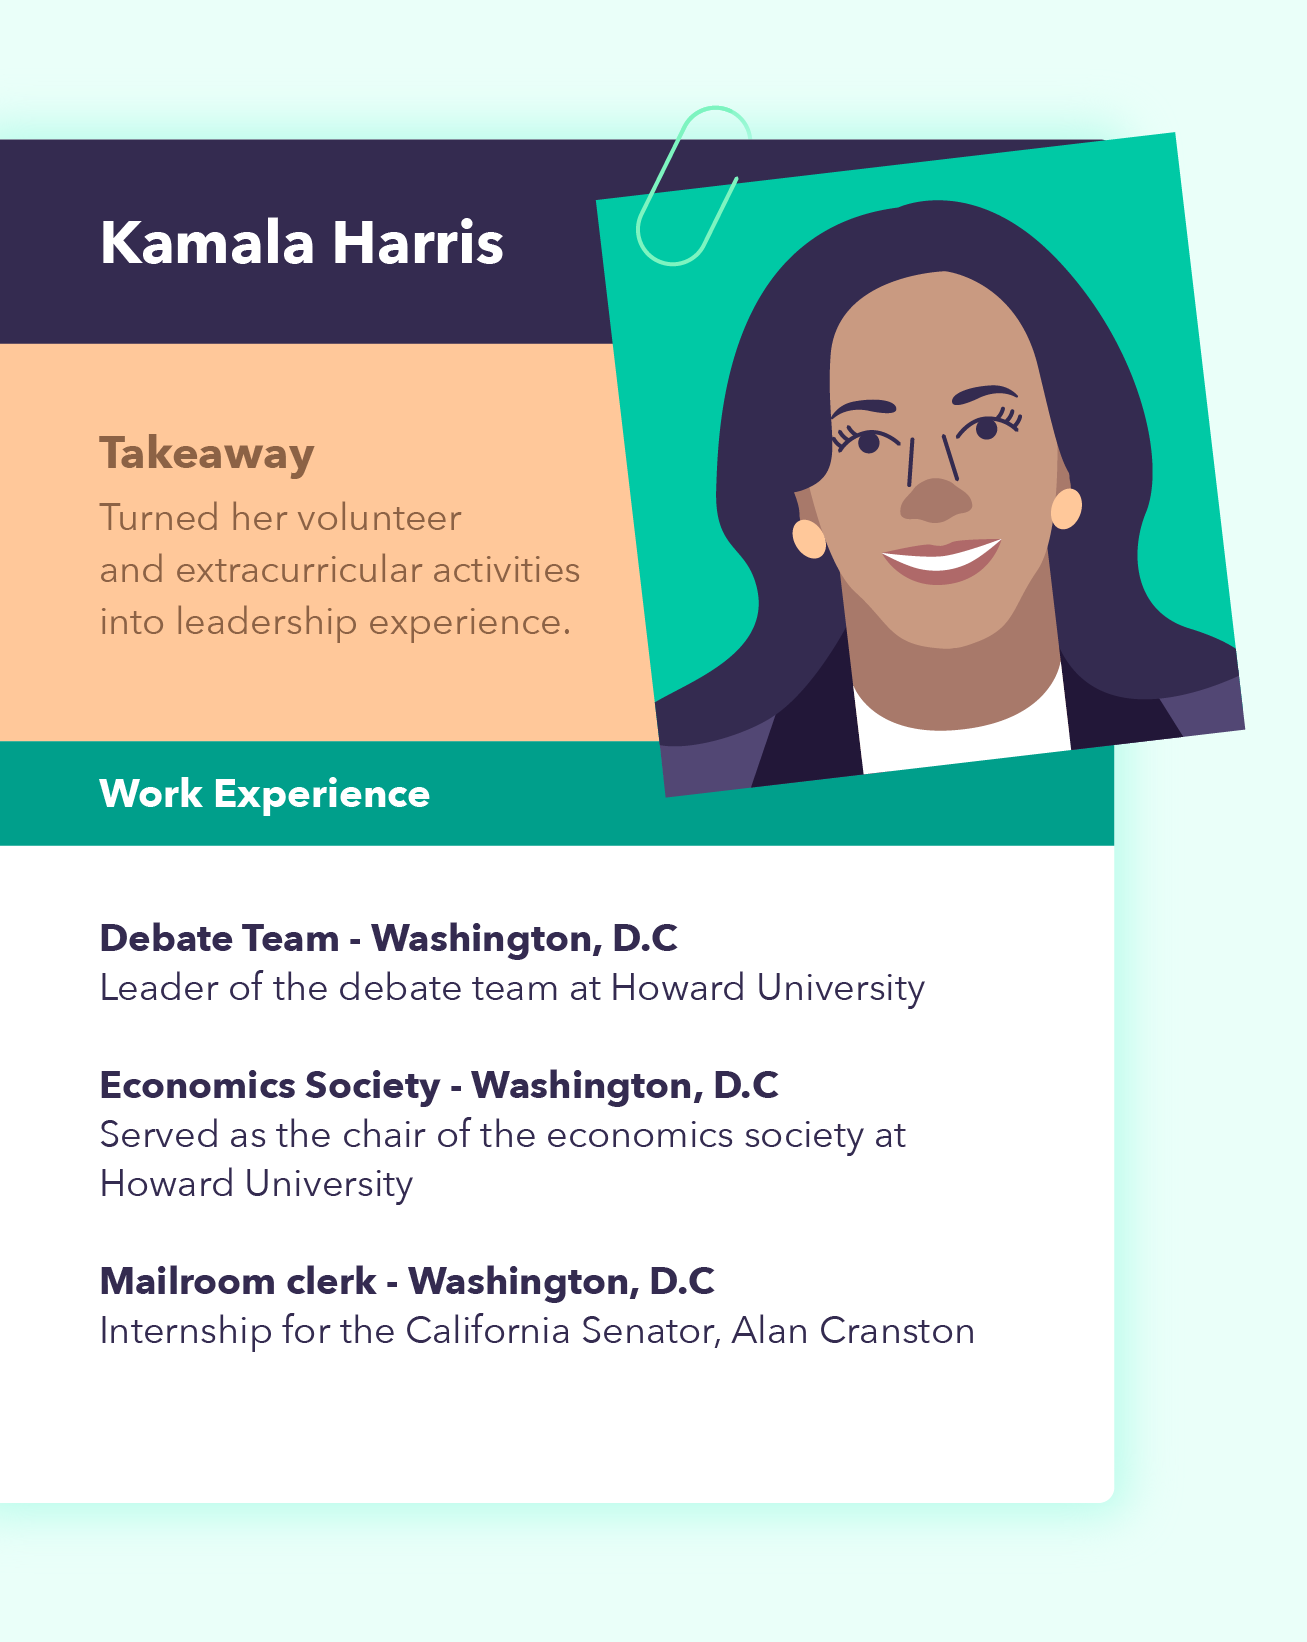 An illustration of Kamala Harris' first job resume.